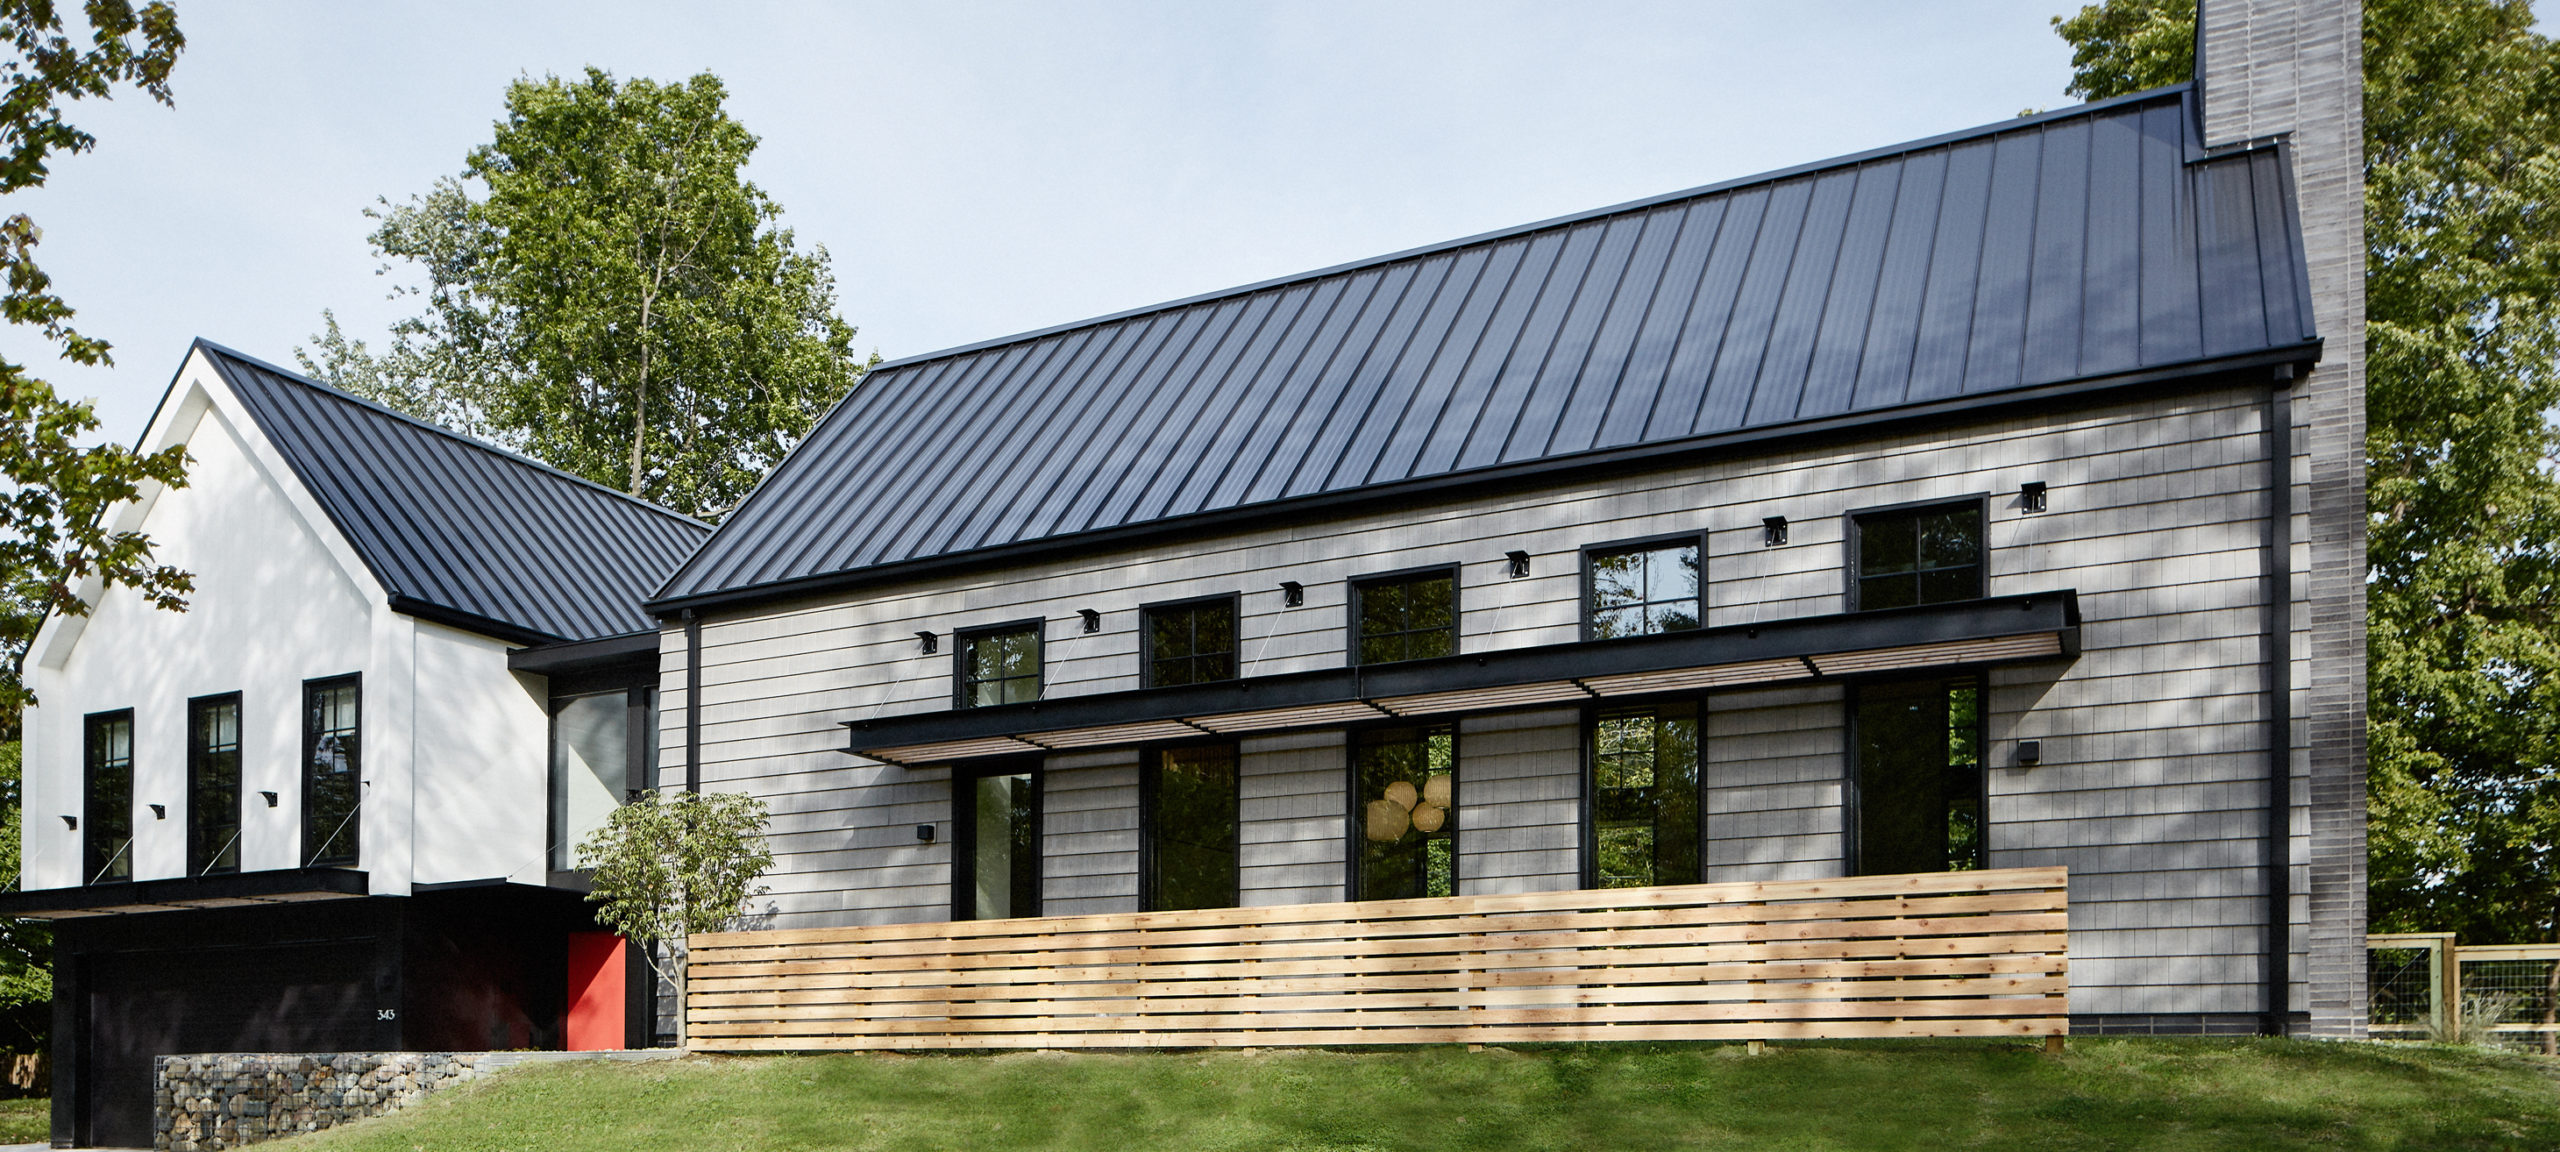 evergreen-portfolio-danish-modern-shingle-home-exterior-house-front-alt-angle-BANNER